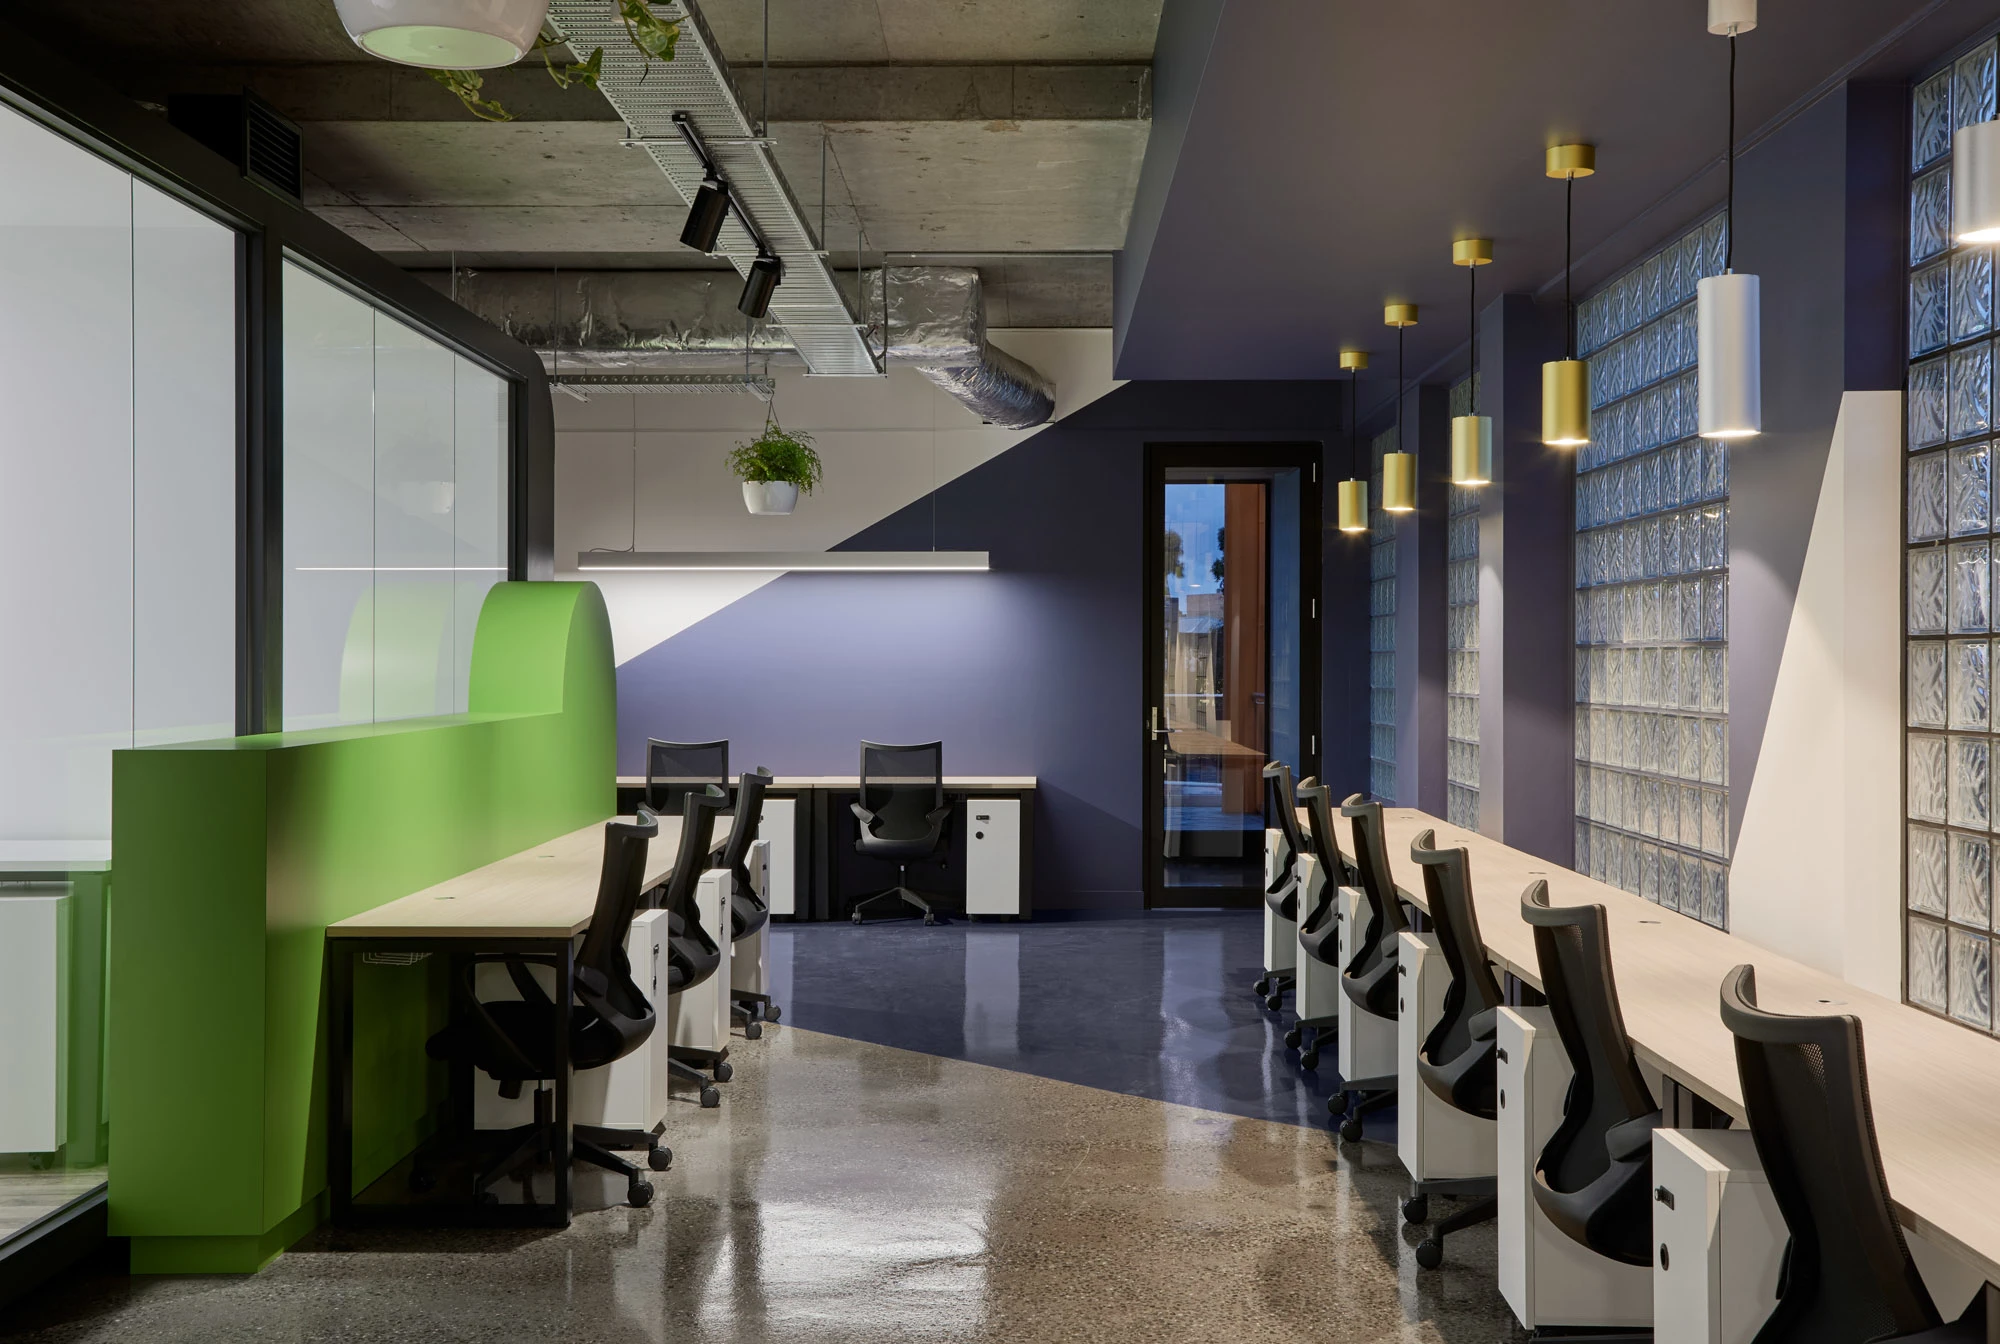 Open plan space with long desk, nine office chairs, Purple wall, glass bricks, green half-wall